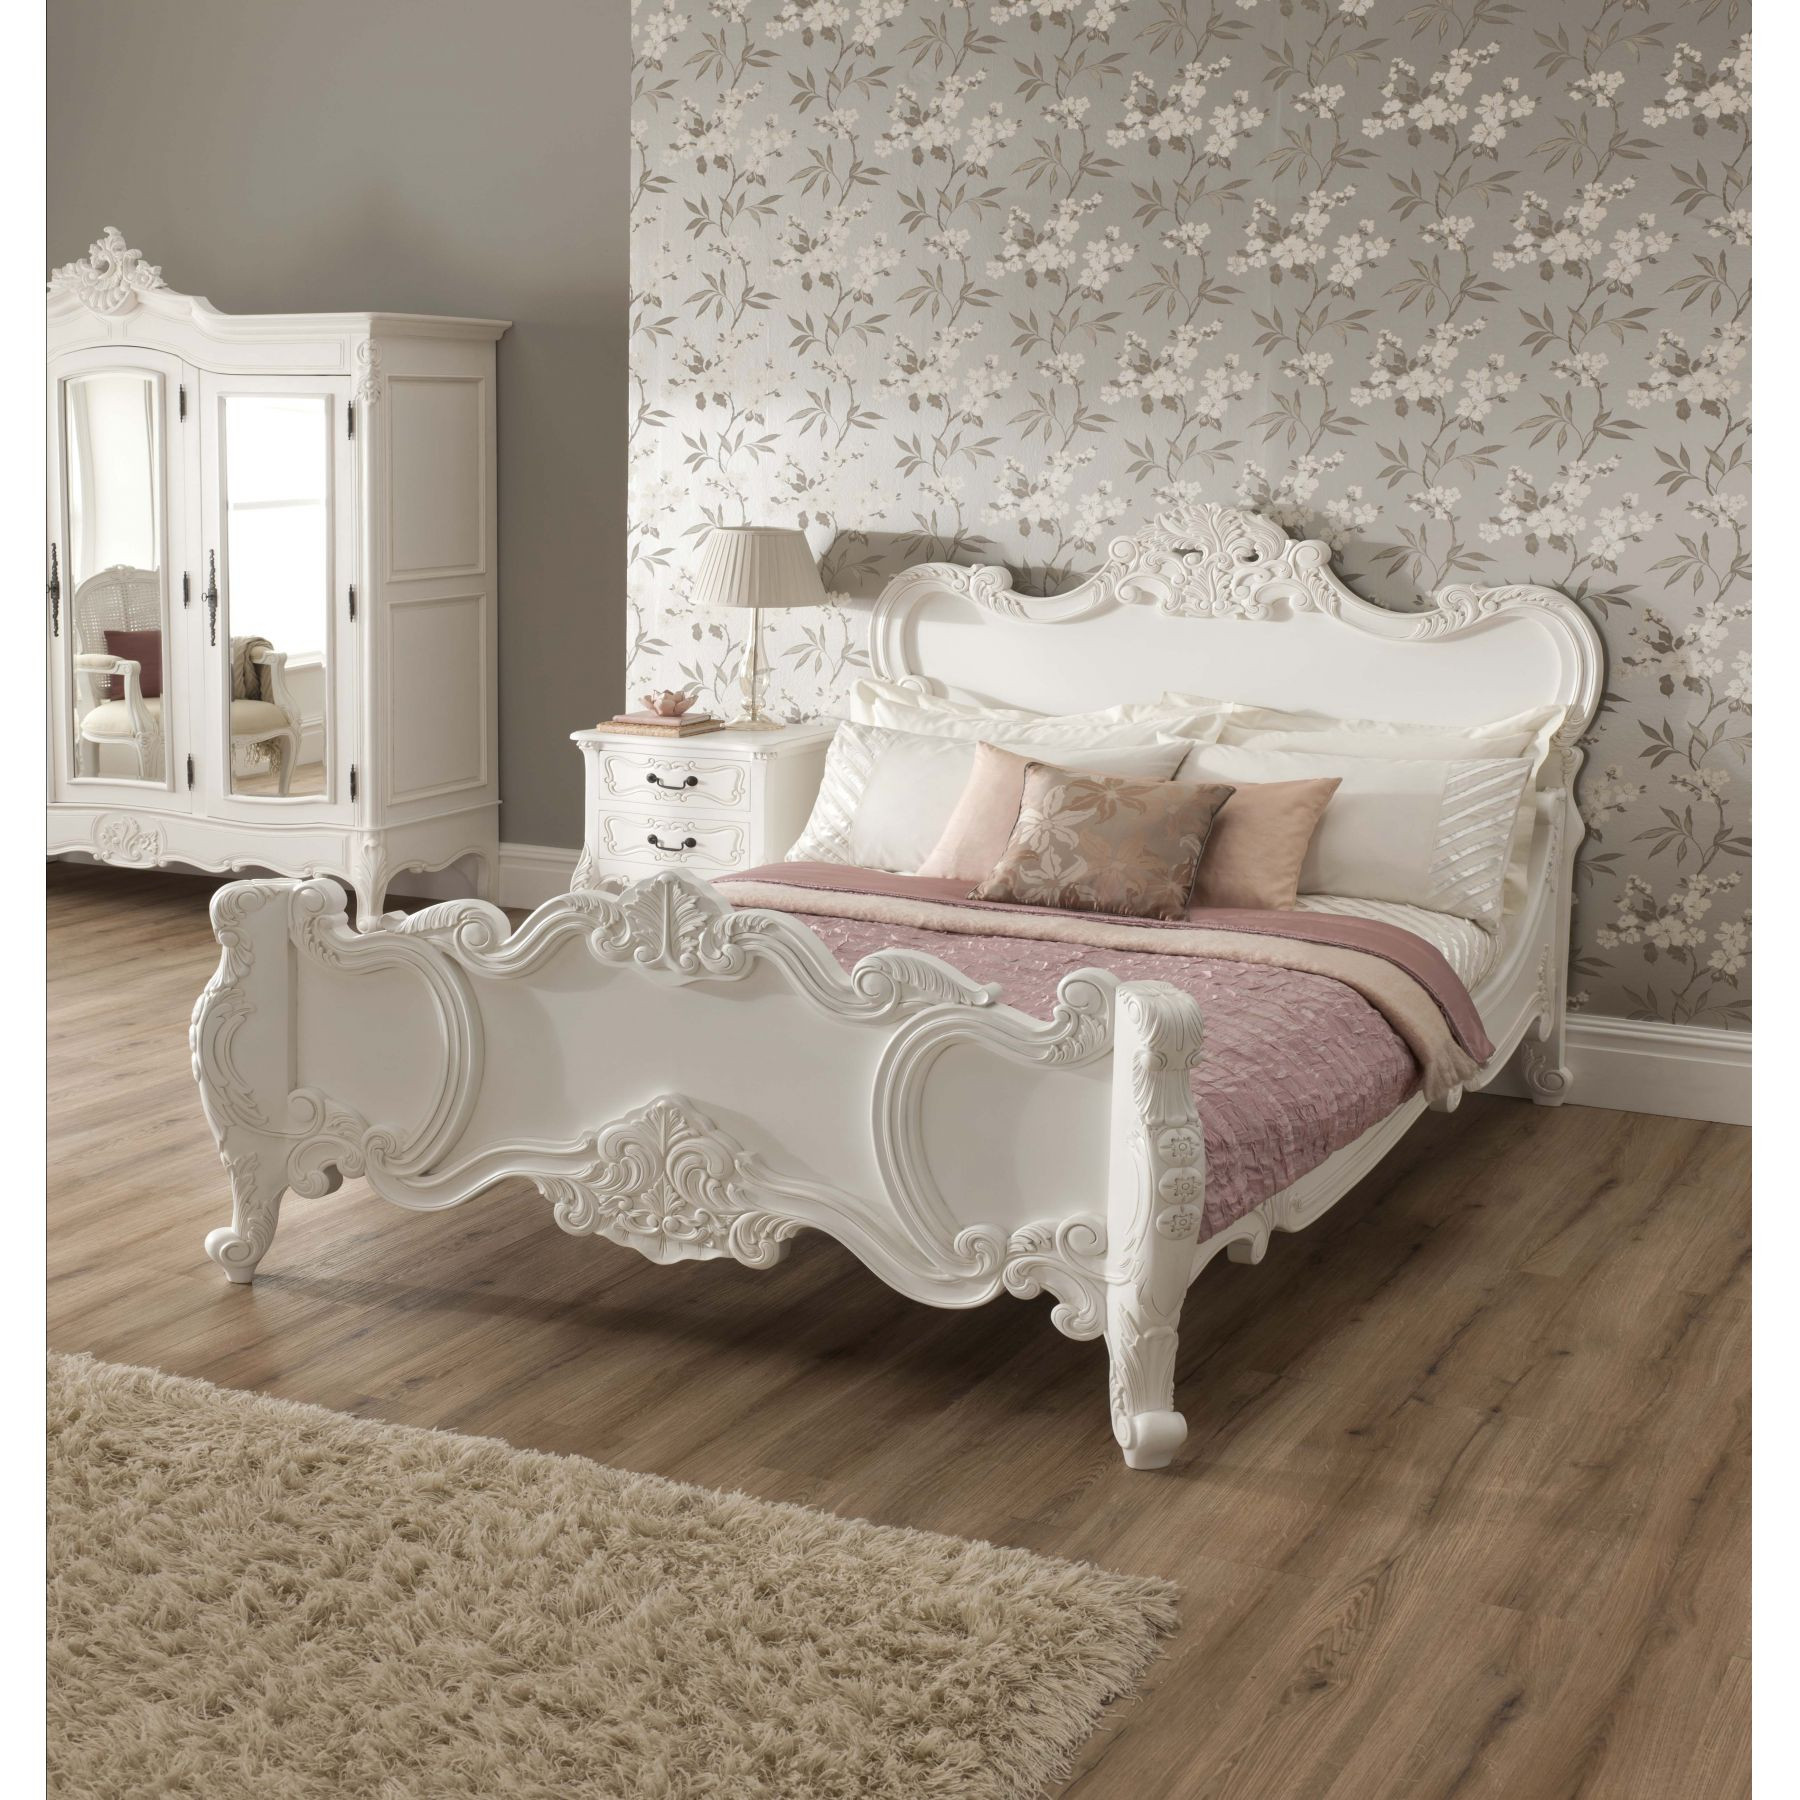 White Shabby Chic Bedroom Furniture
 Vintage Your Room with 9 Shabby Chic Bedroom Furniture